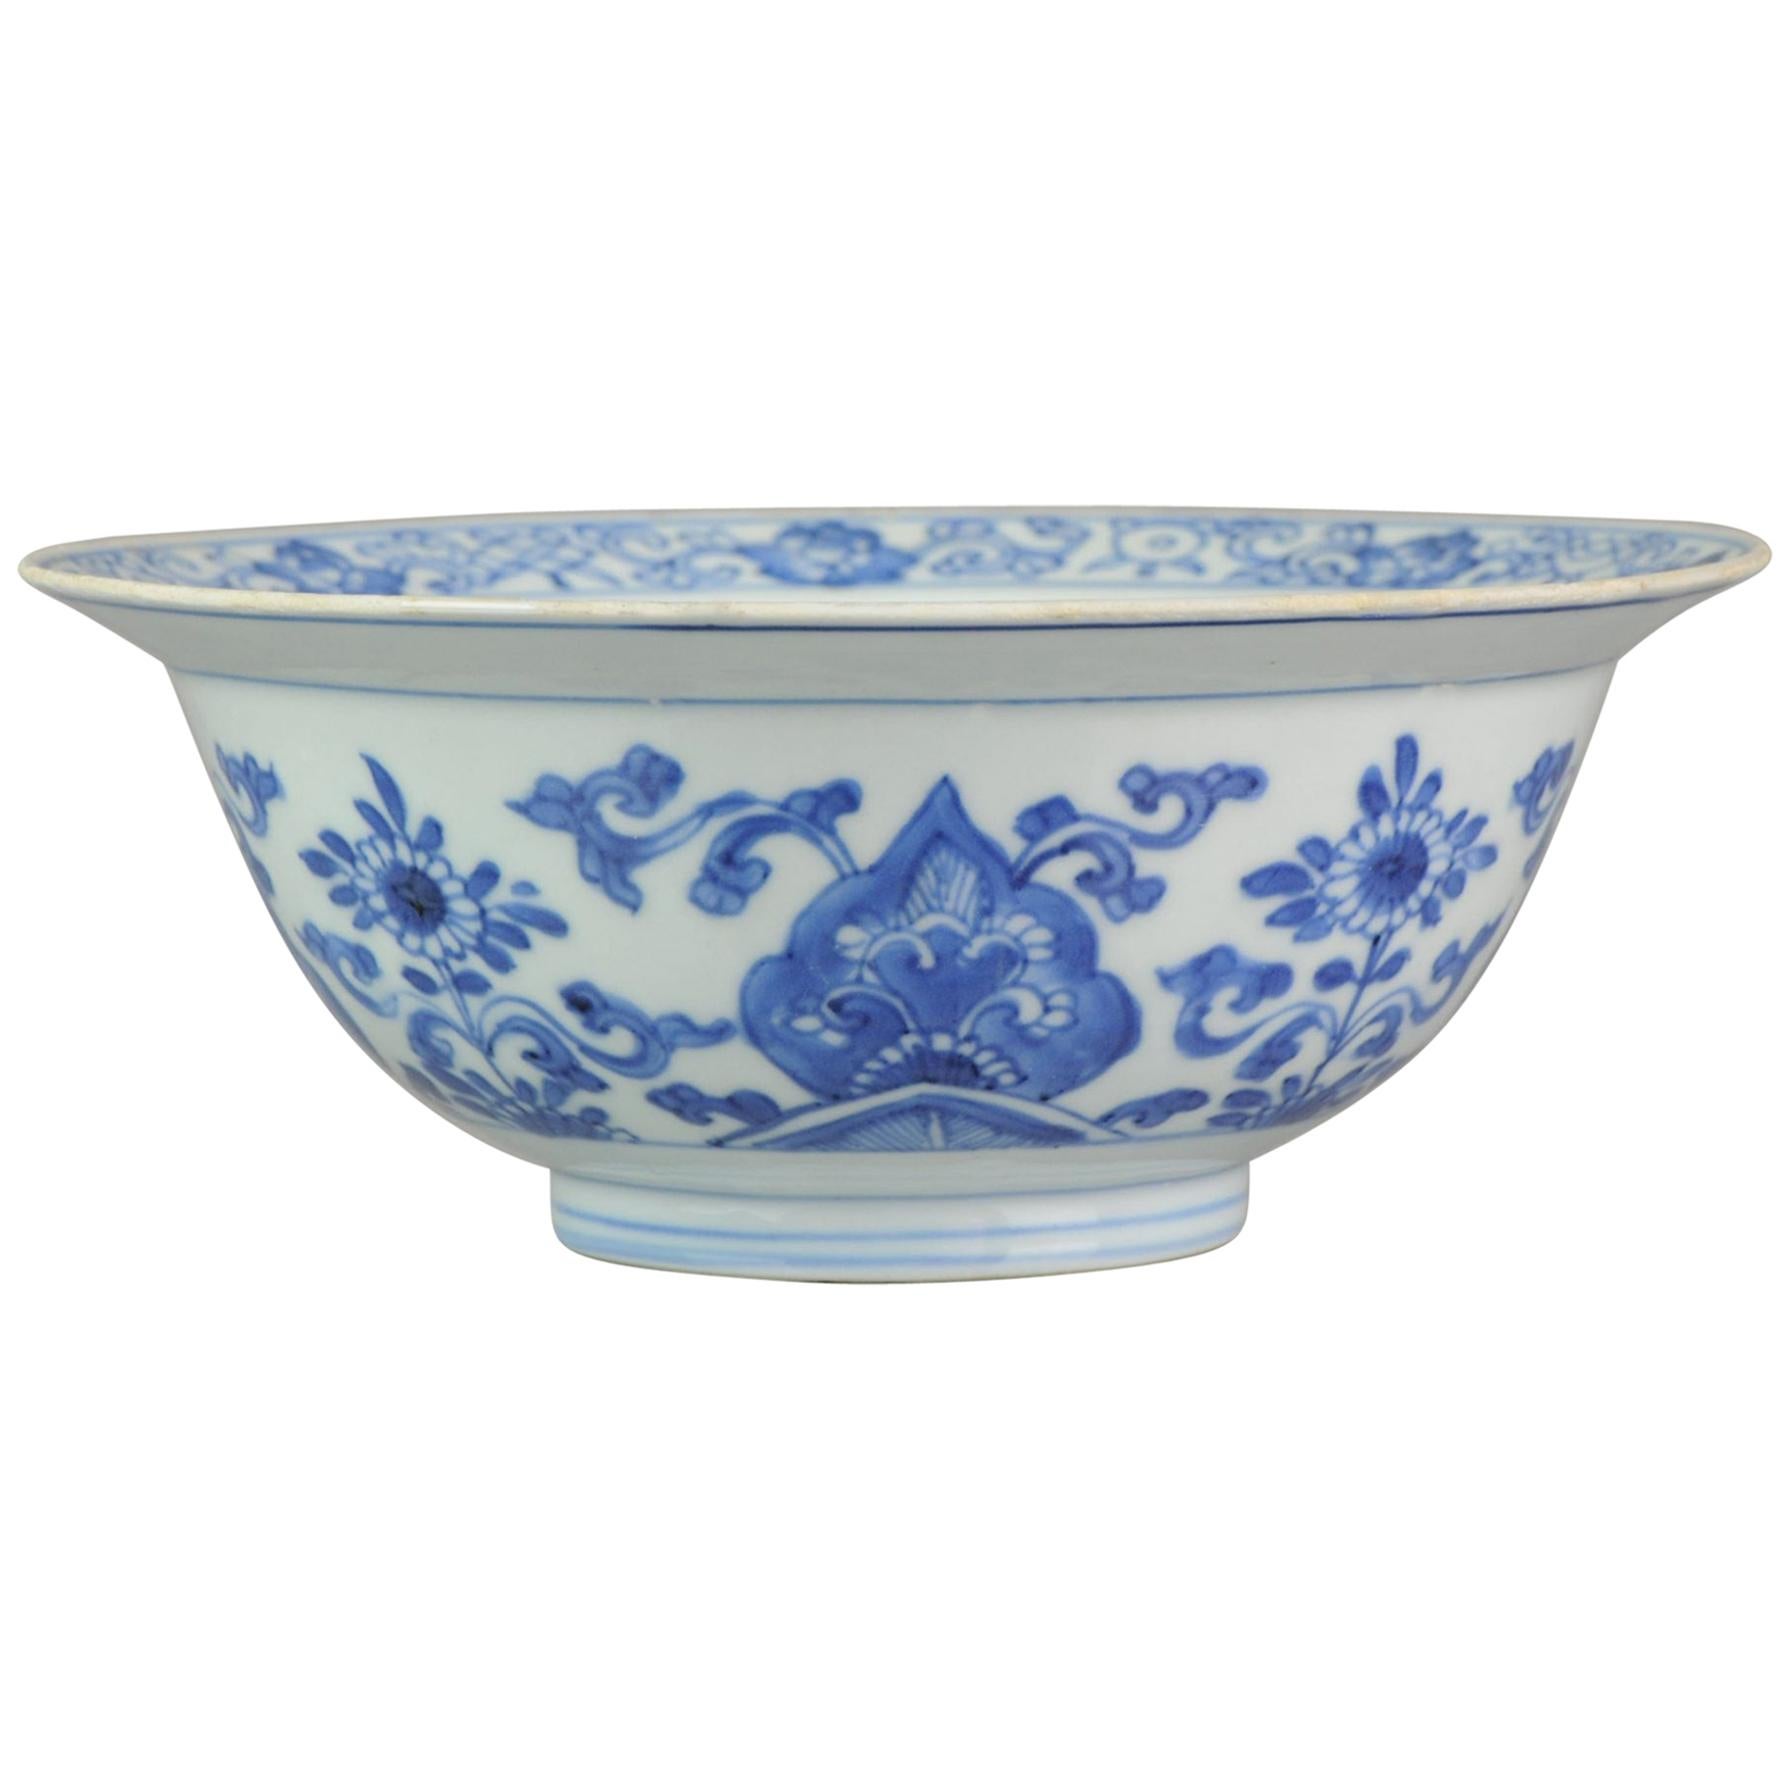 Big Antique Chinese Arabic Style Klapmuts Blue White China Dish